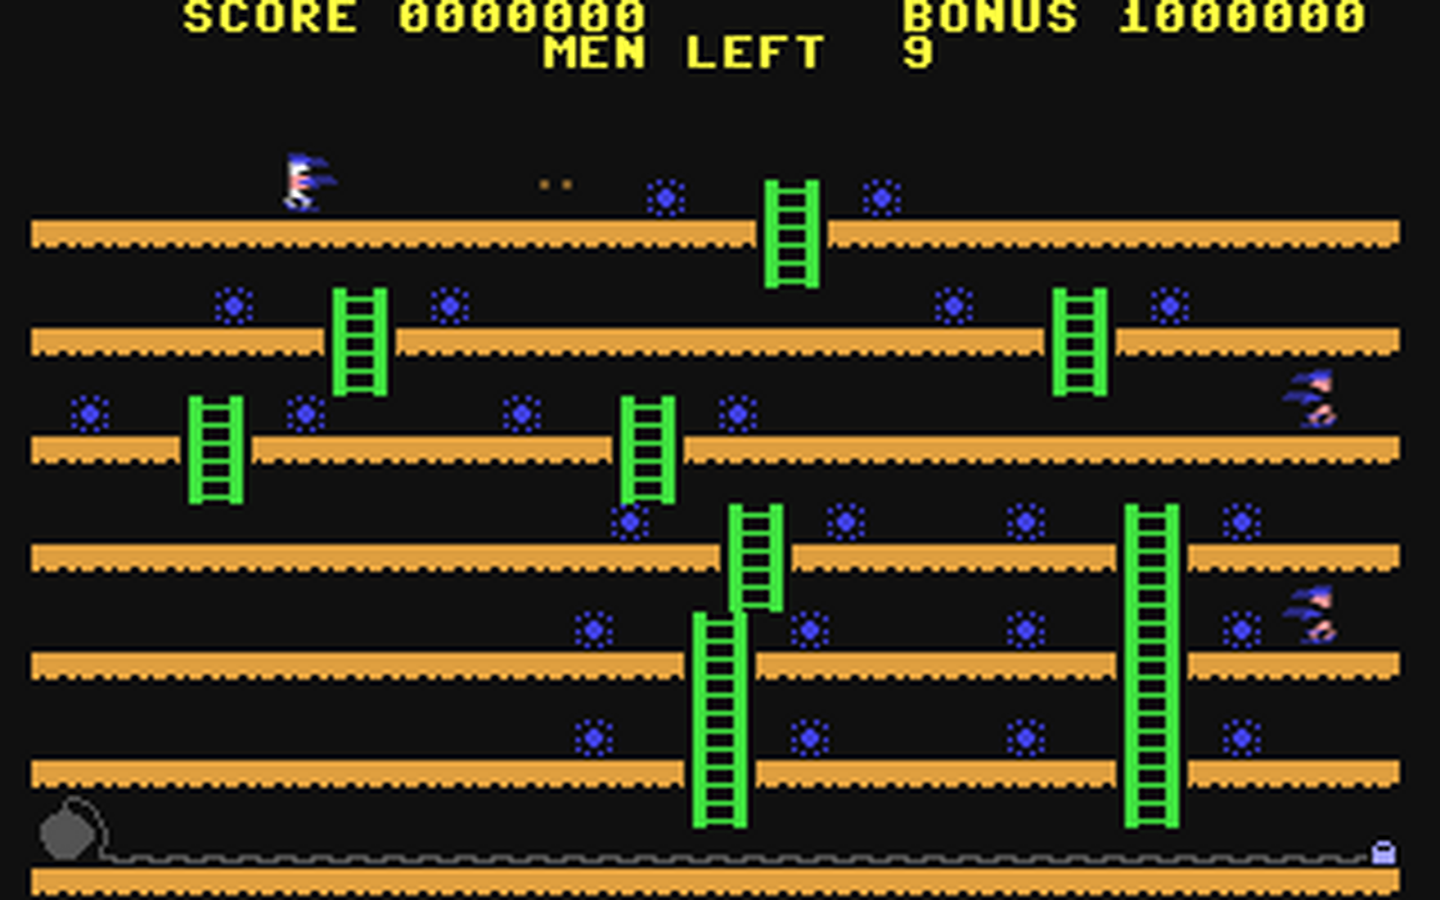 C64 GameBase Zone_Six Mantua_Soft